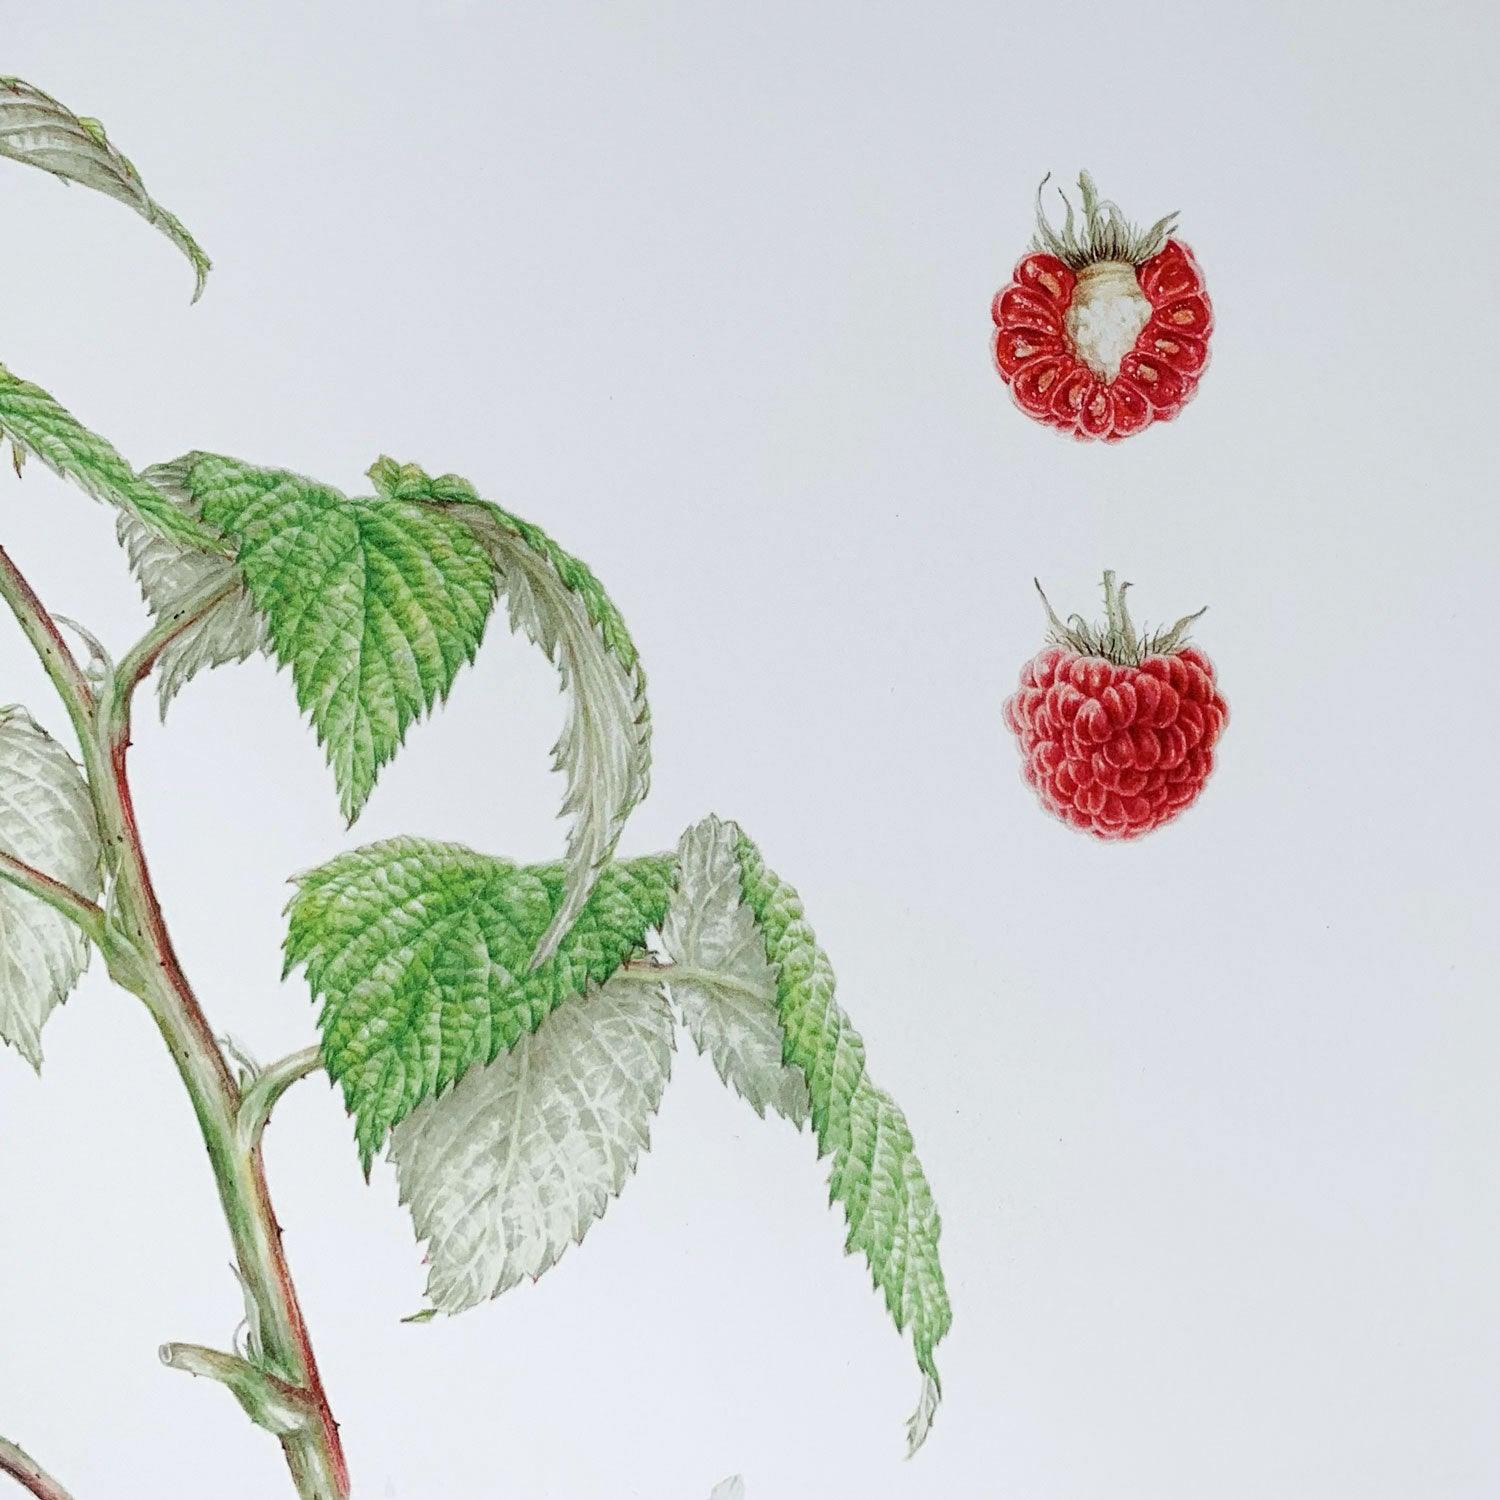 Limited Edition Print "Raspberry" - Michael Michaud Jewellery